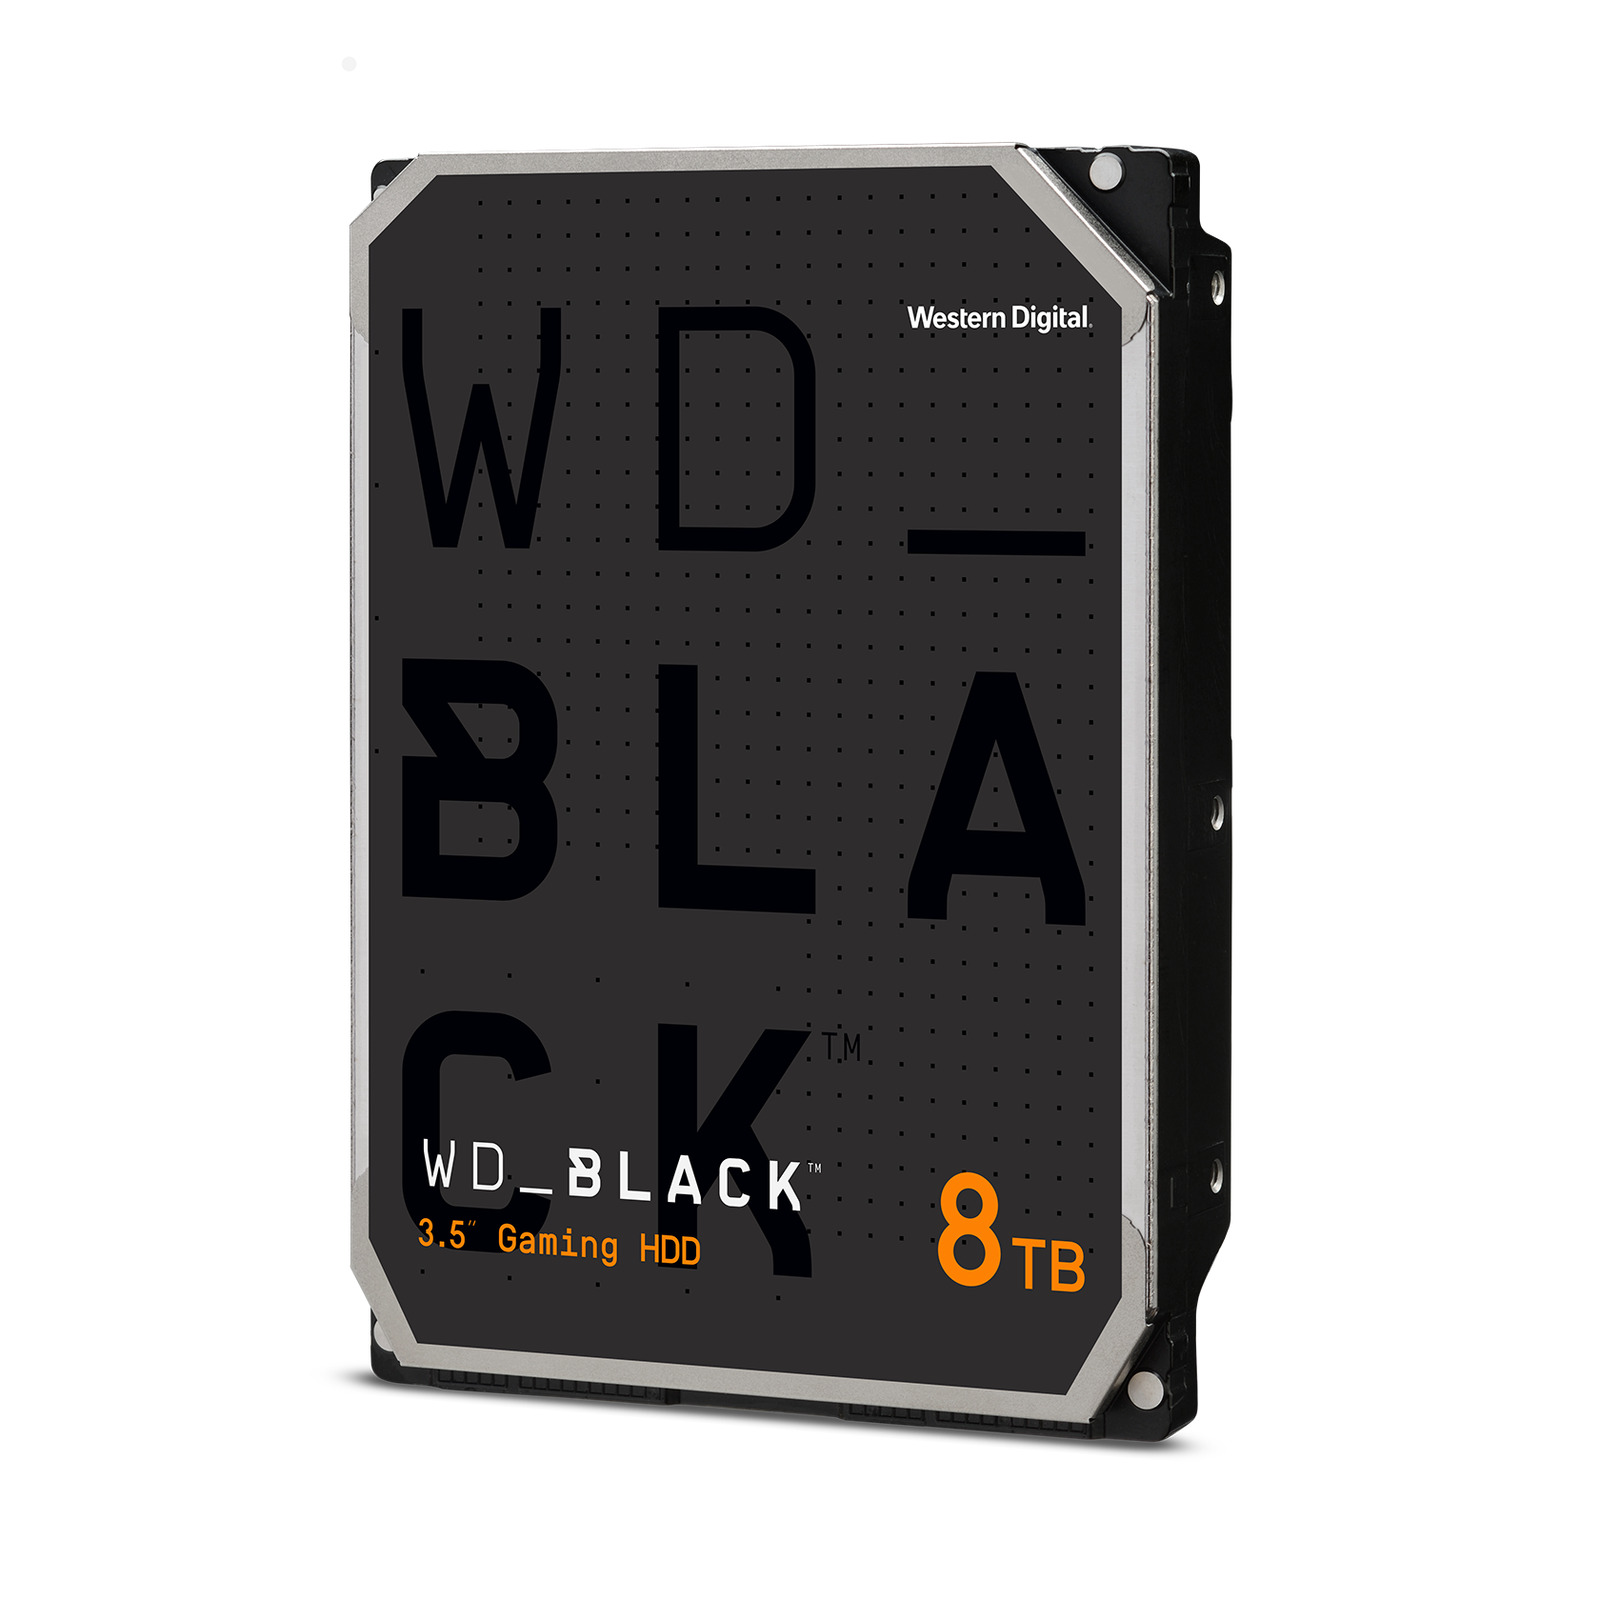 WD_BLACK 8TB 3.5'' Internal Gaming Hard Drive, 128MB Cache - WD8002FZWX